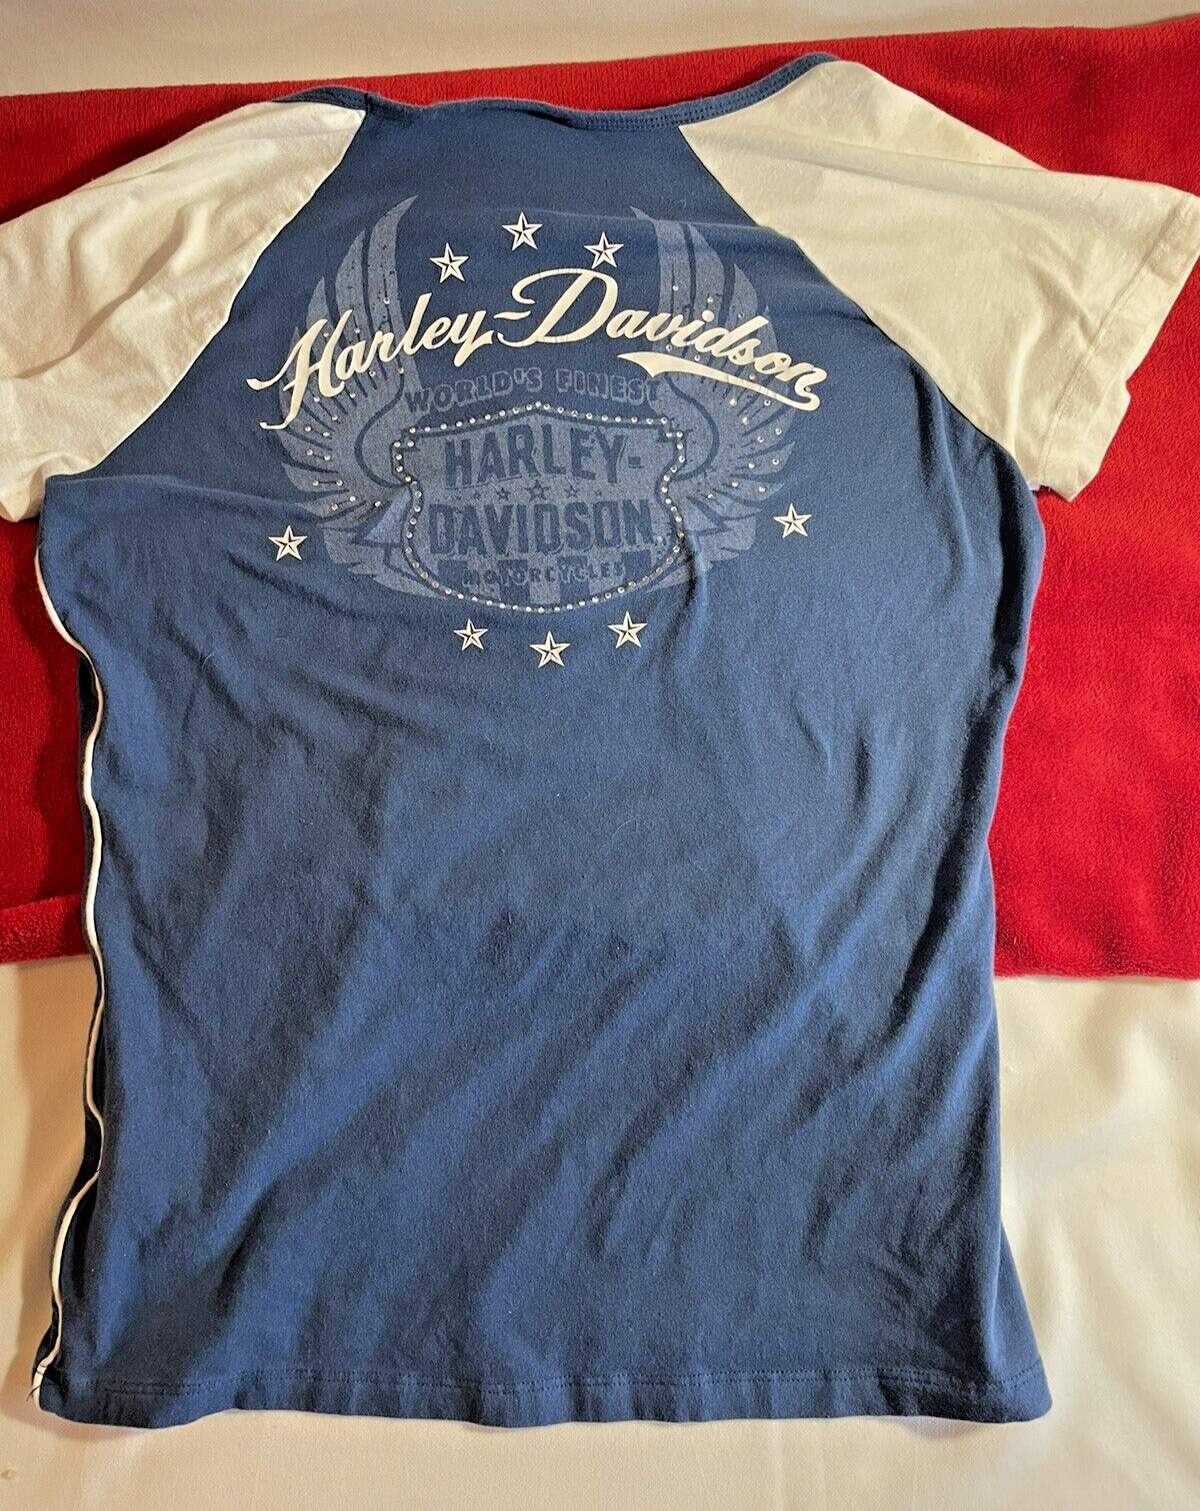 Harley Davidson World\'s Finest - Womans medium t-shirt